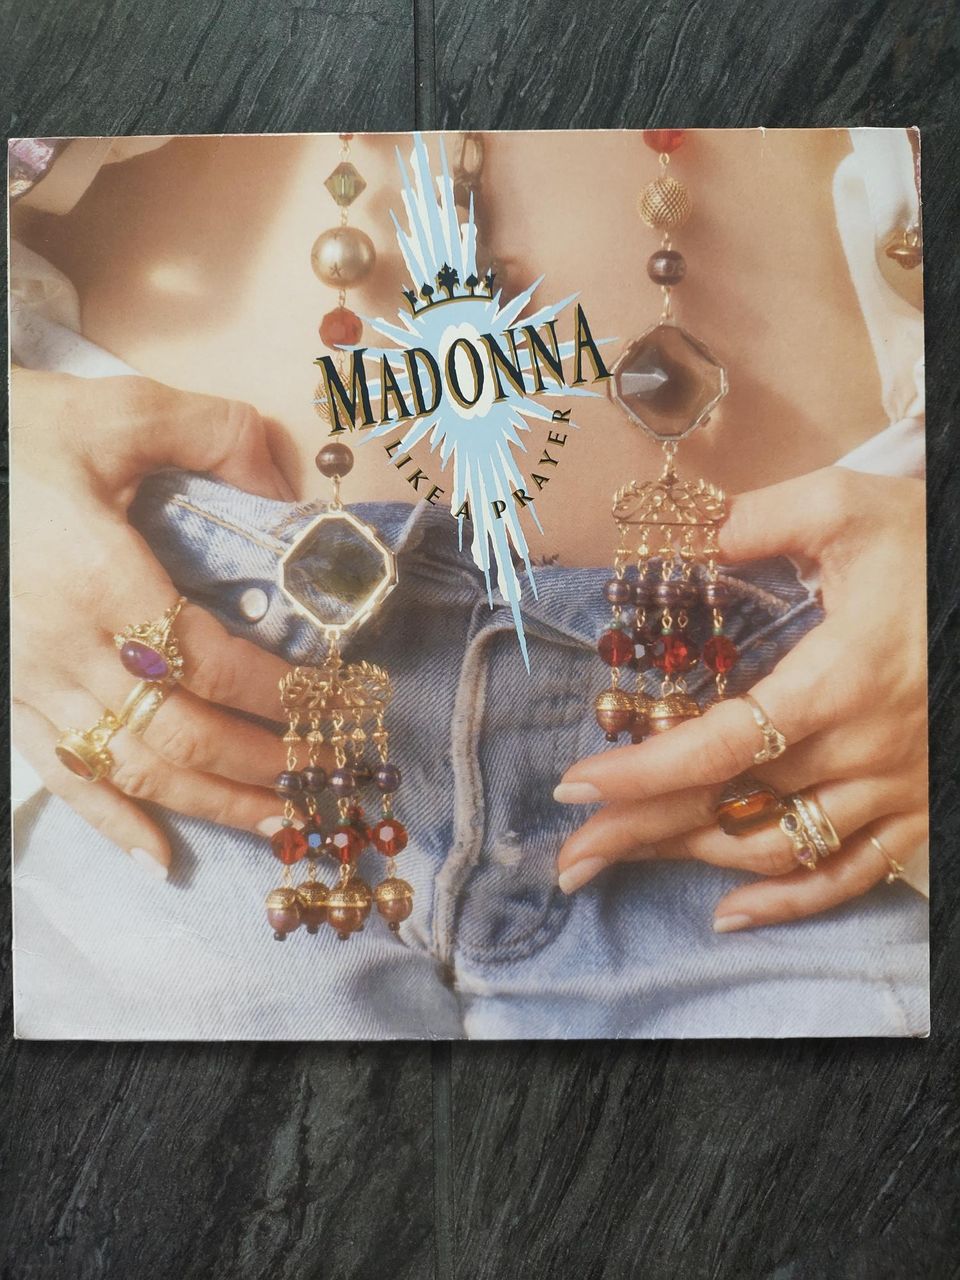 Madonna Like a prayer LP levy